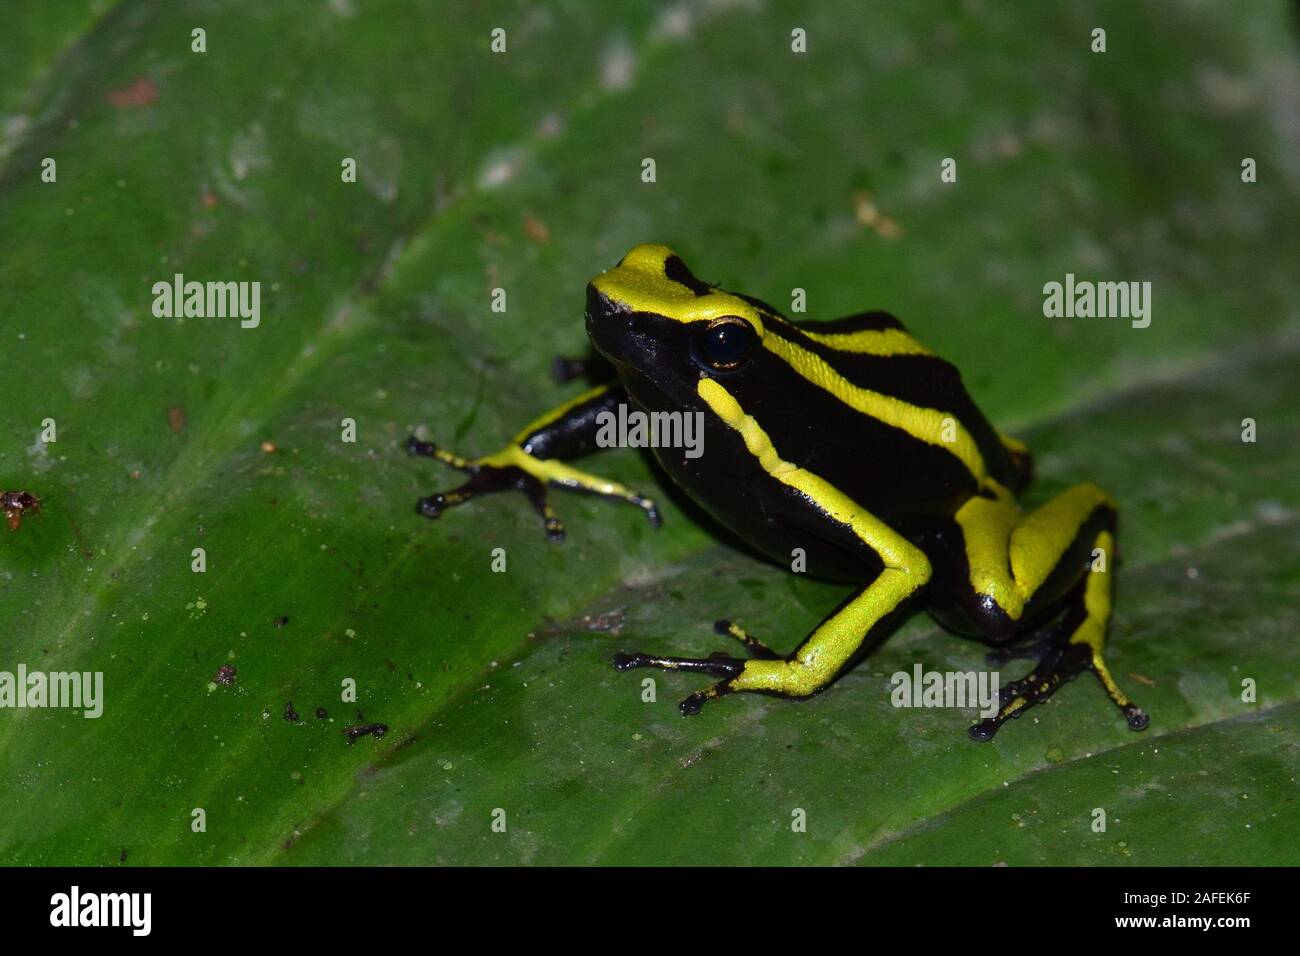 A Three-striped Poison Frog in Amazon rainforest Stock Photo